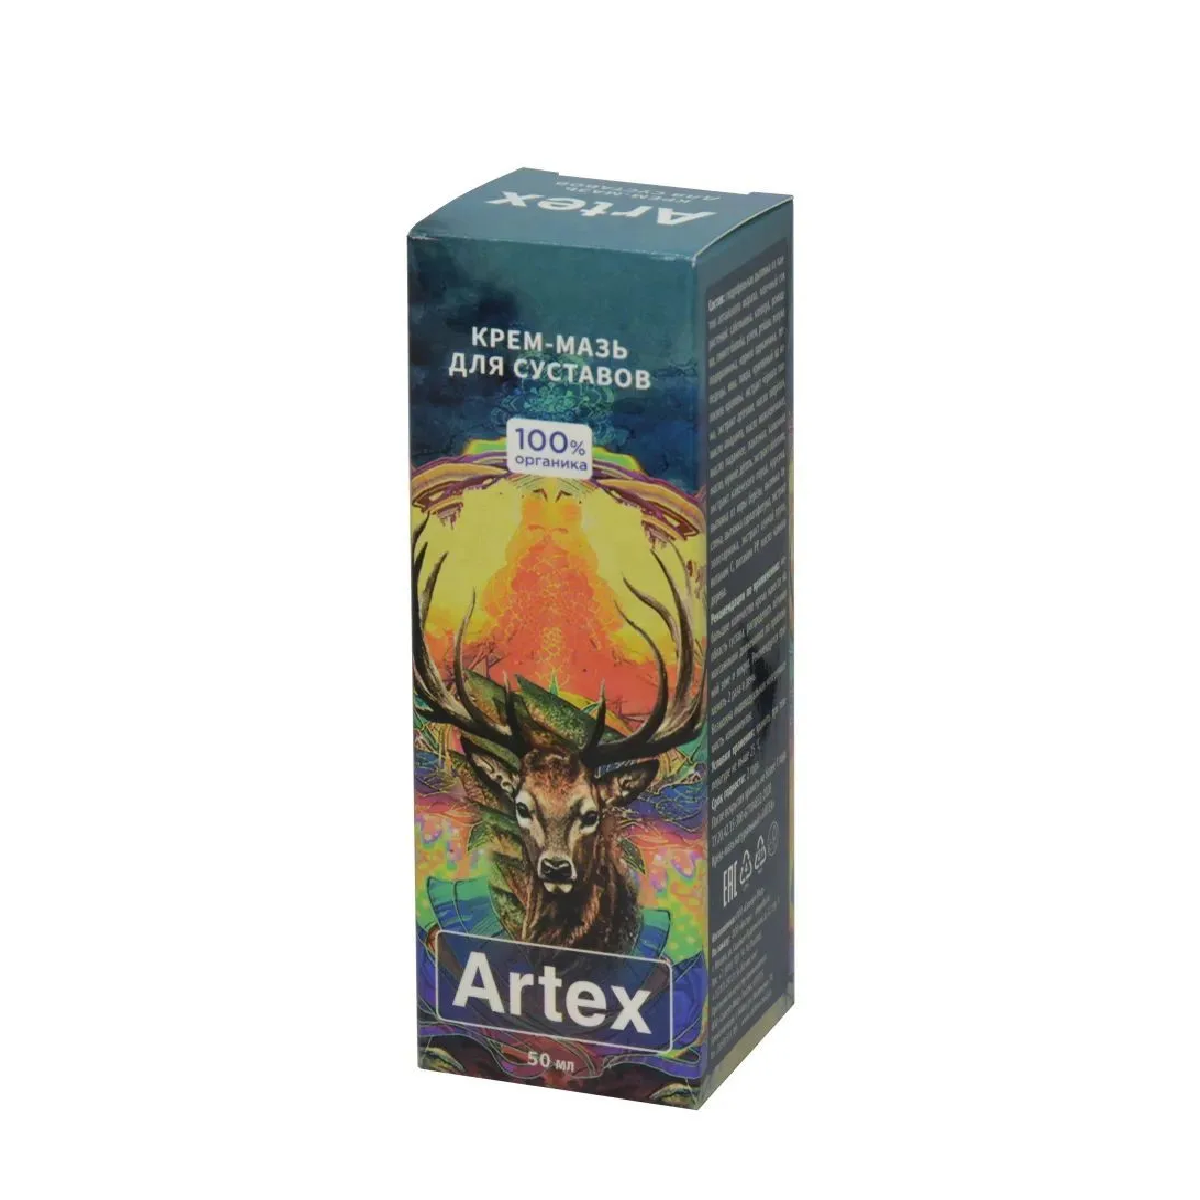 ARTEX крем-мазь для суставов, 50 мл.